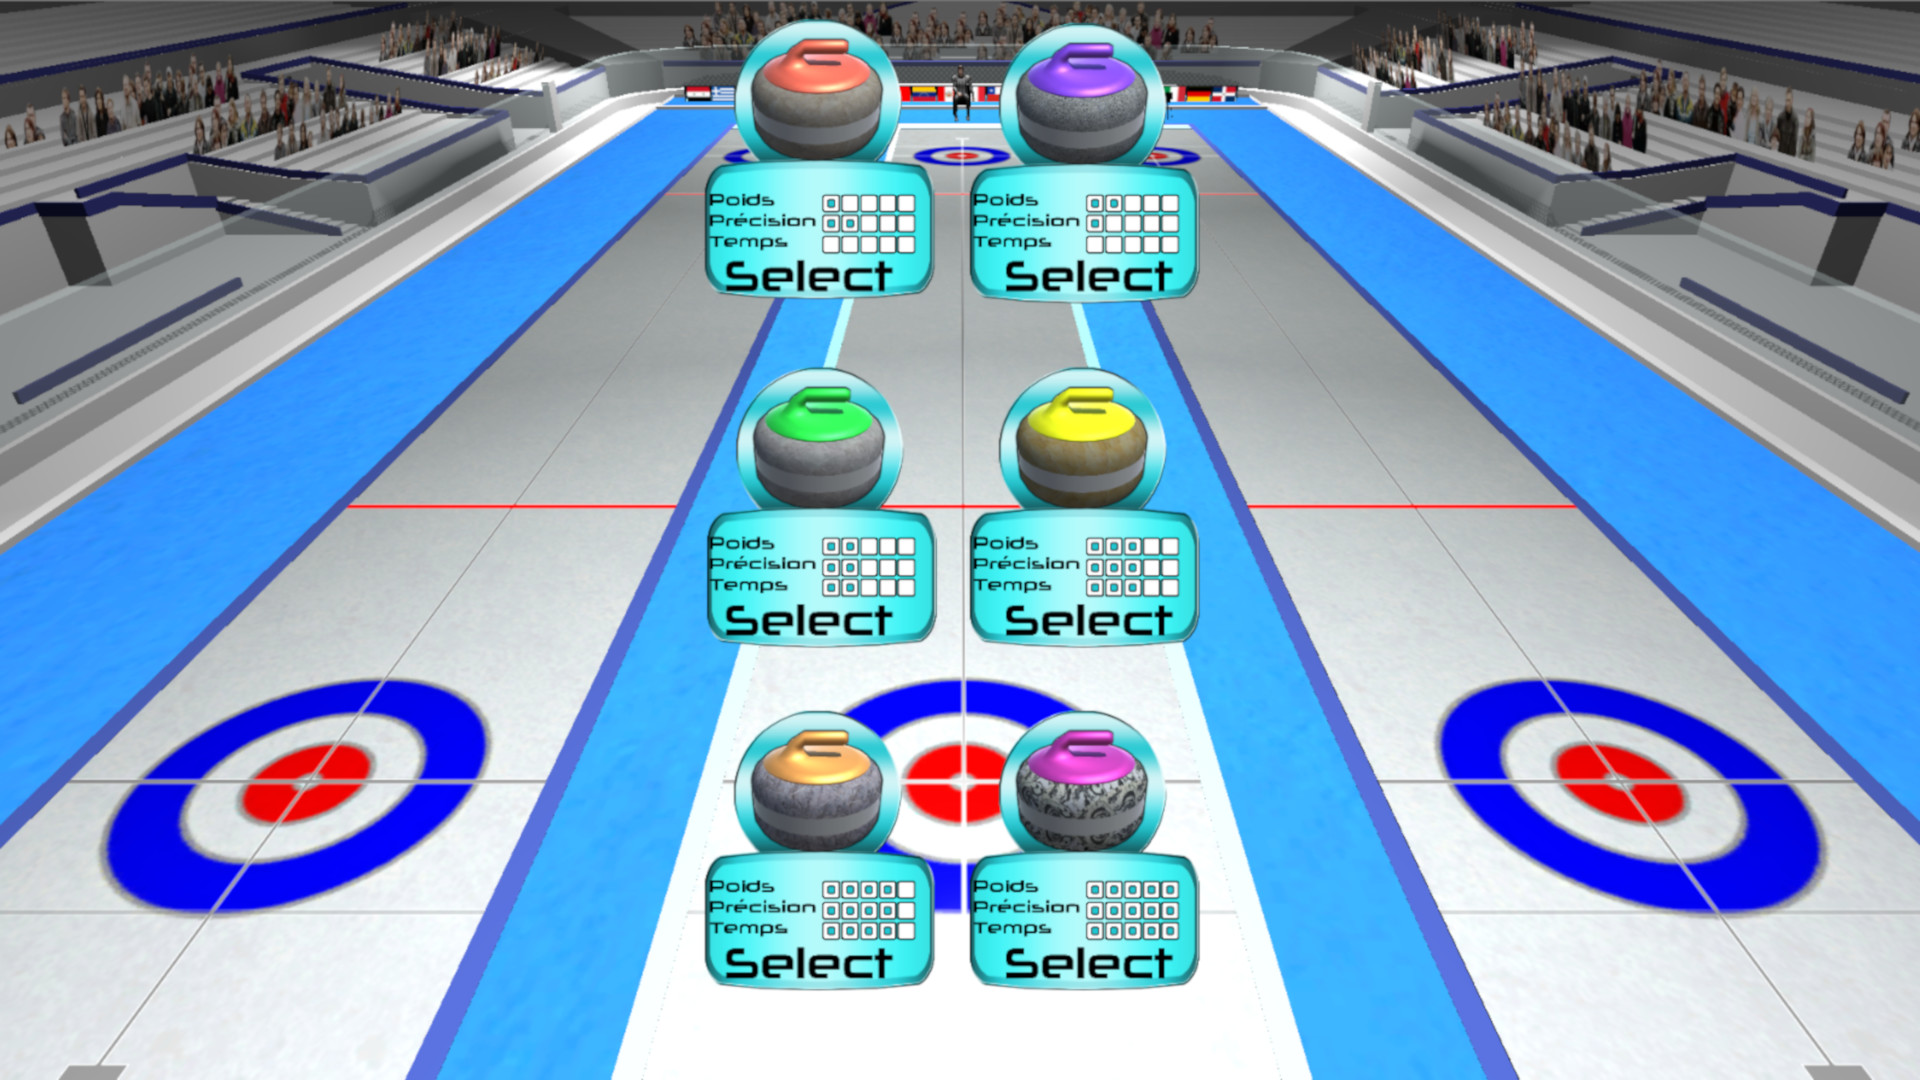 curling game online